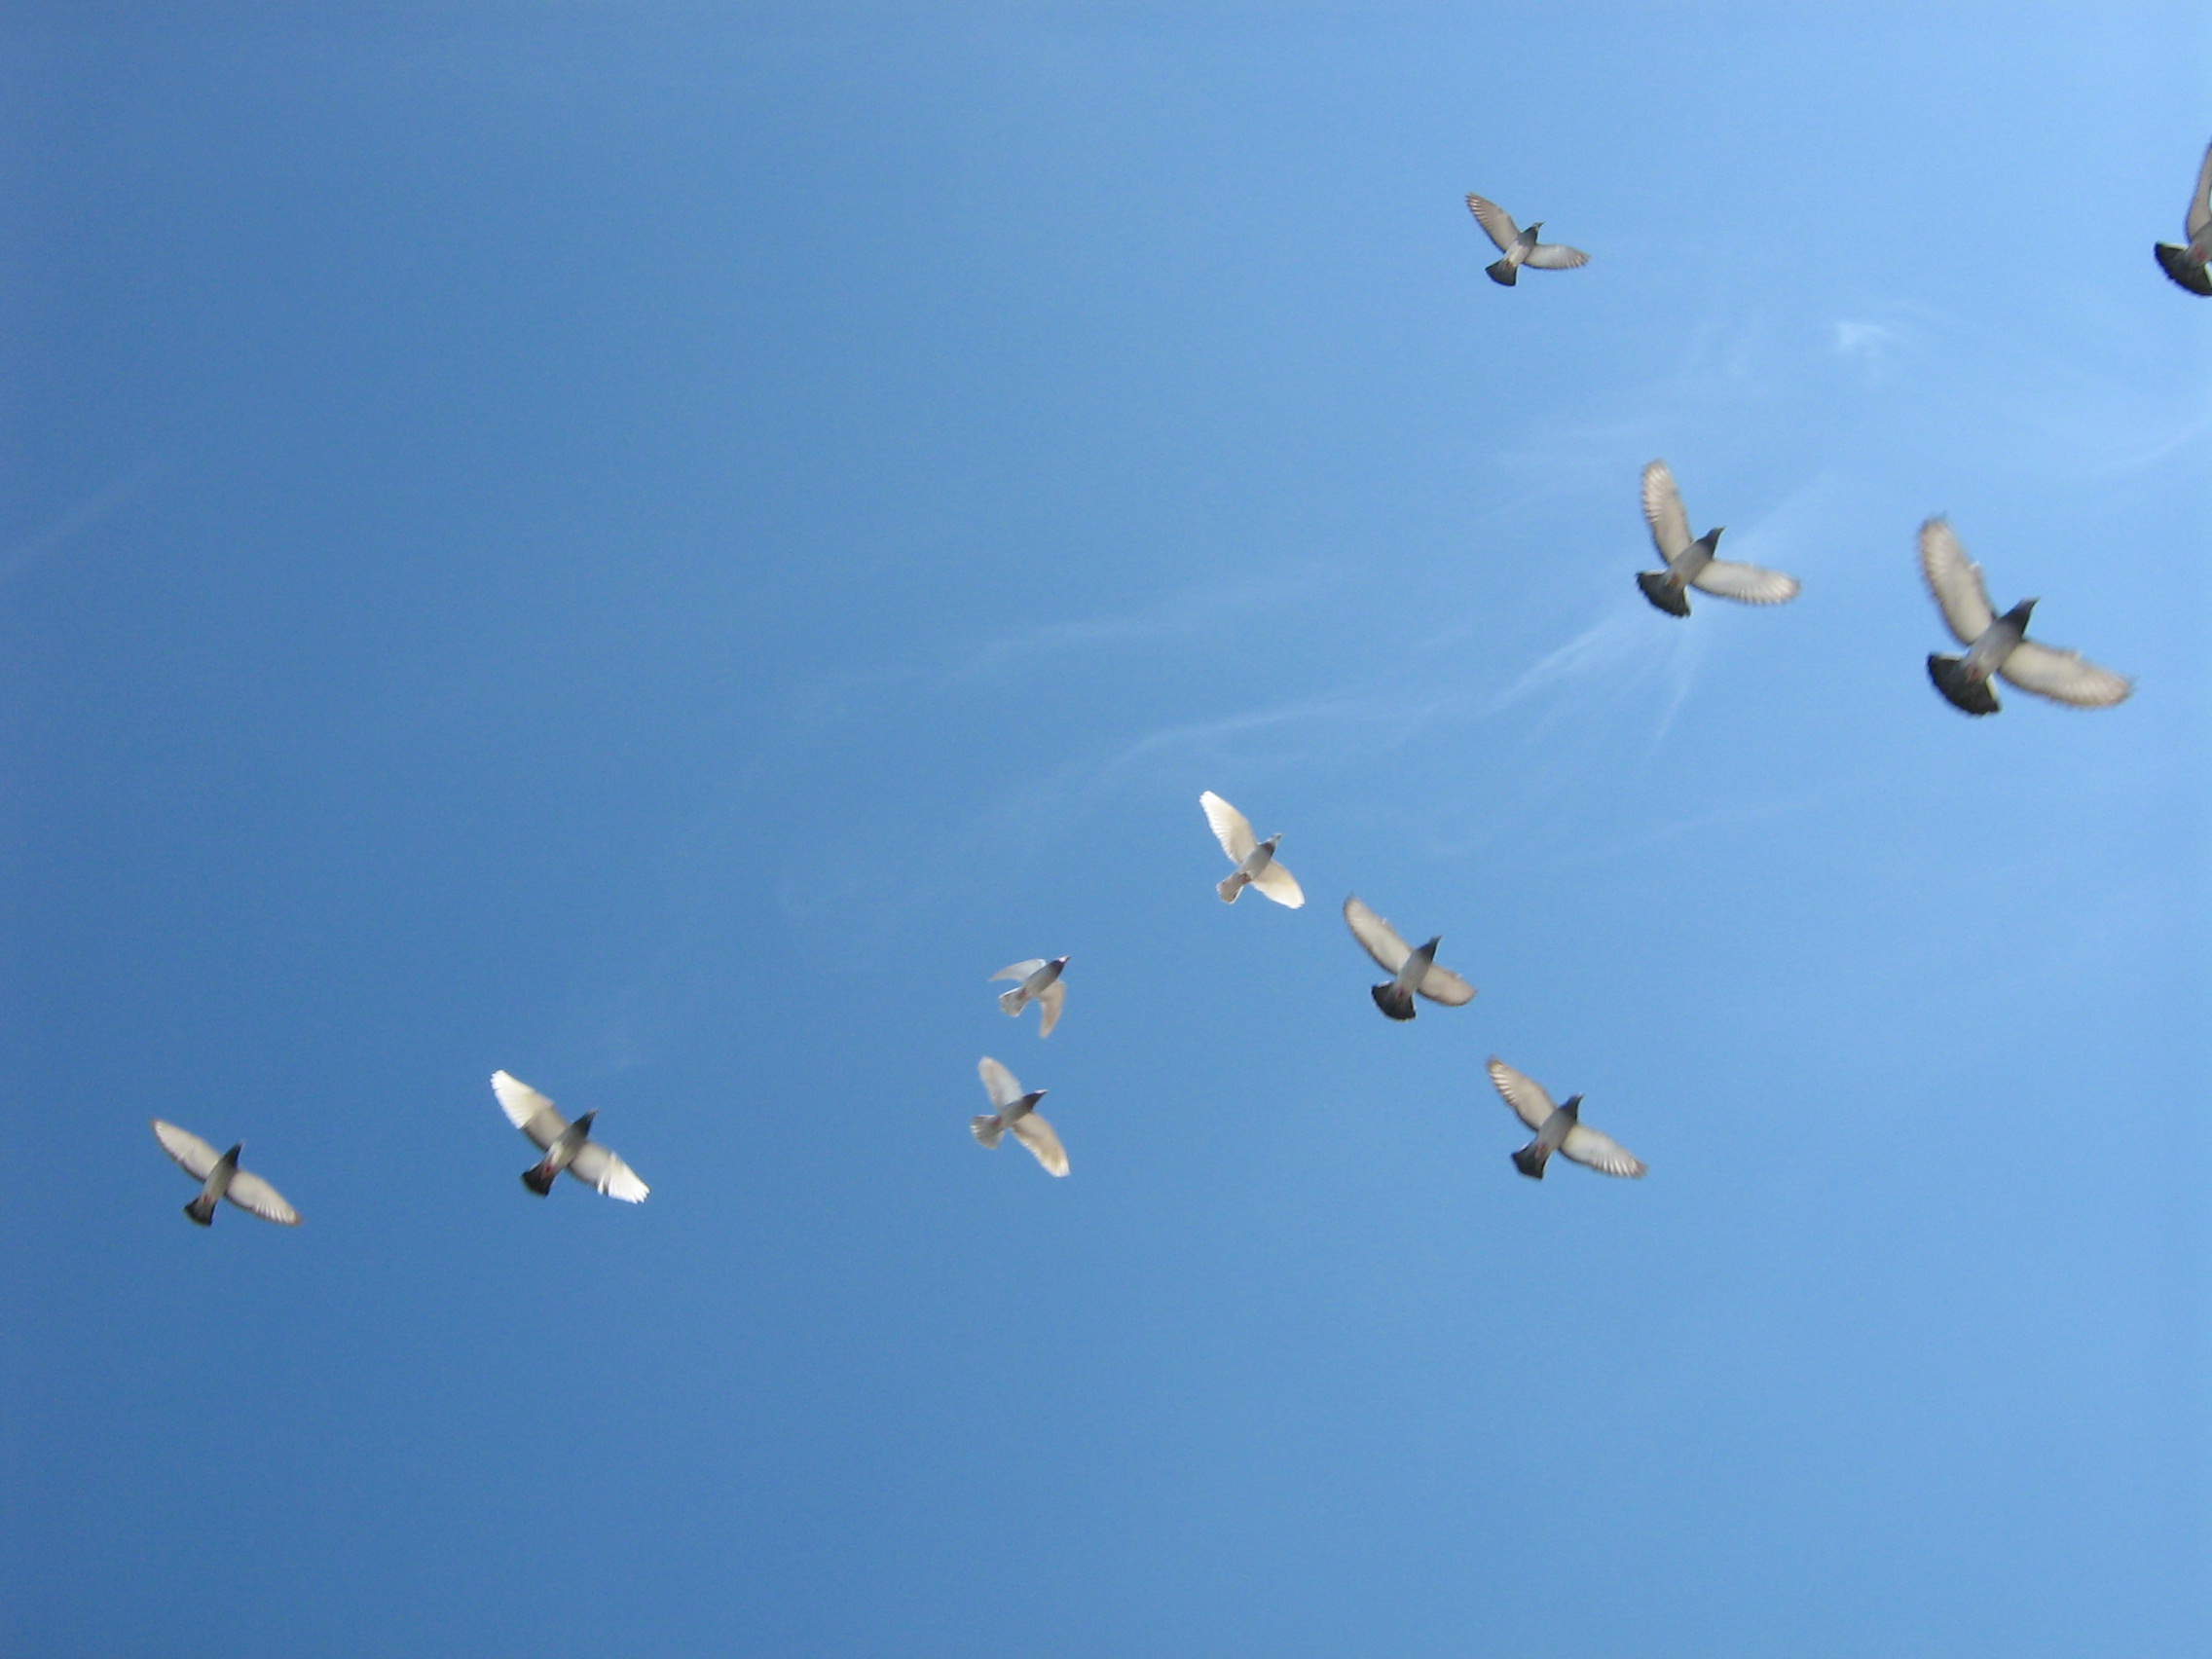 File:Flying-birds.jpg - Wikimedia Commons